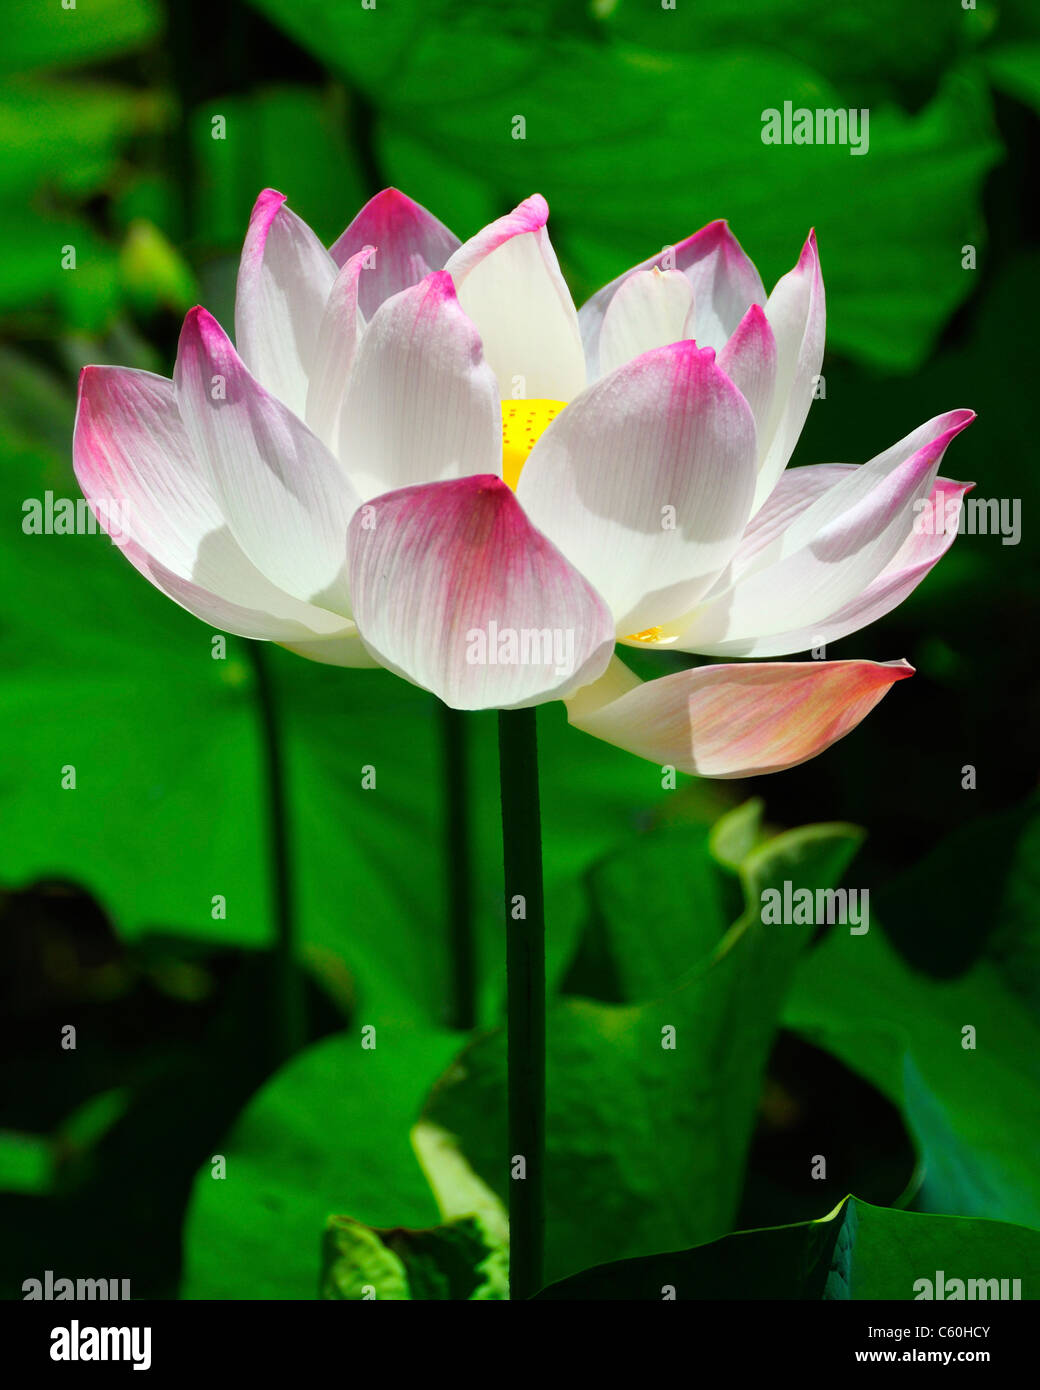 Nelumbo nucifera (sacred lotus), Nelumbonaceae family. Aquatic perennial native to India. Stock Photo